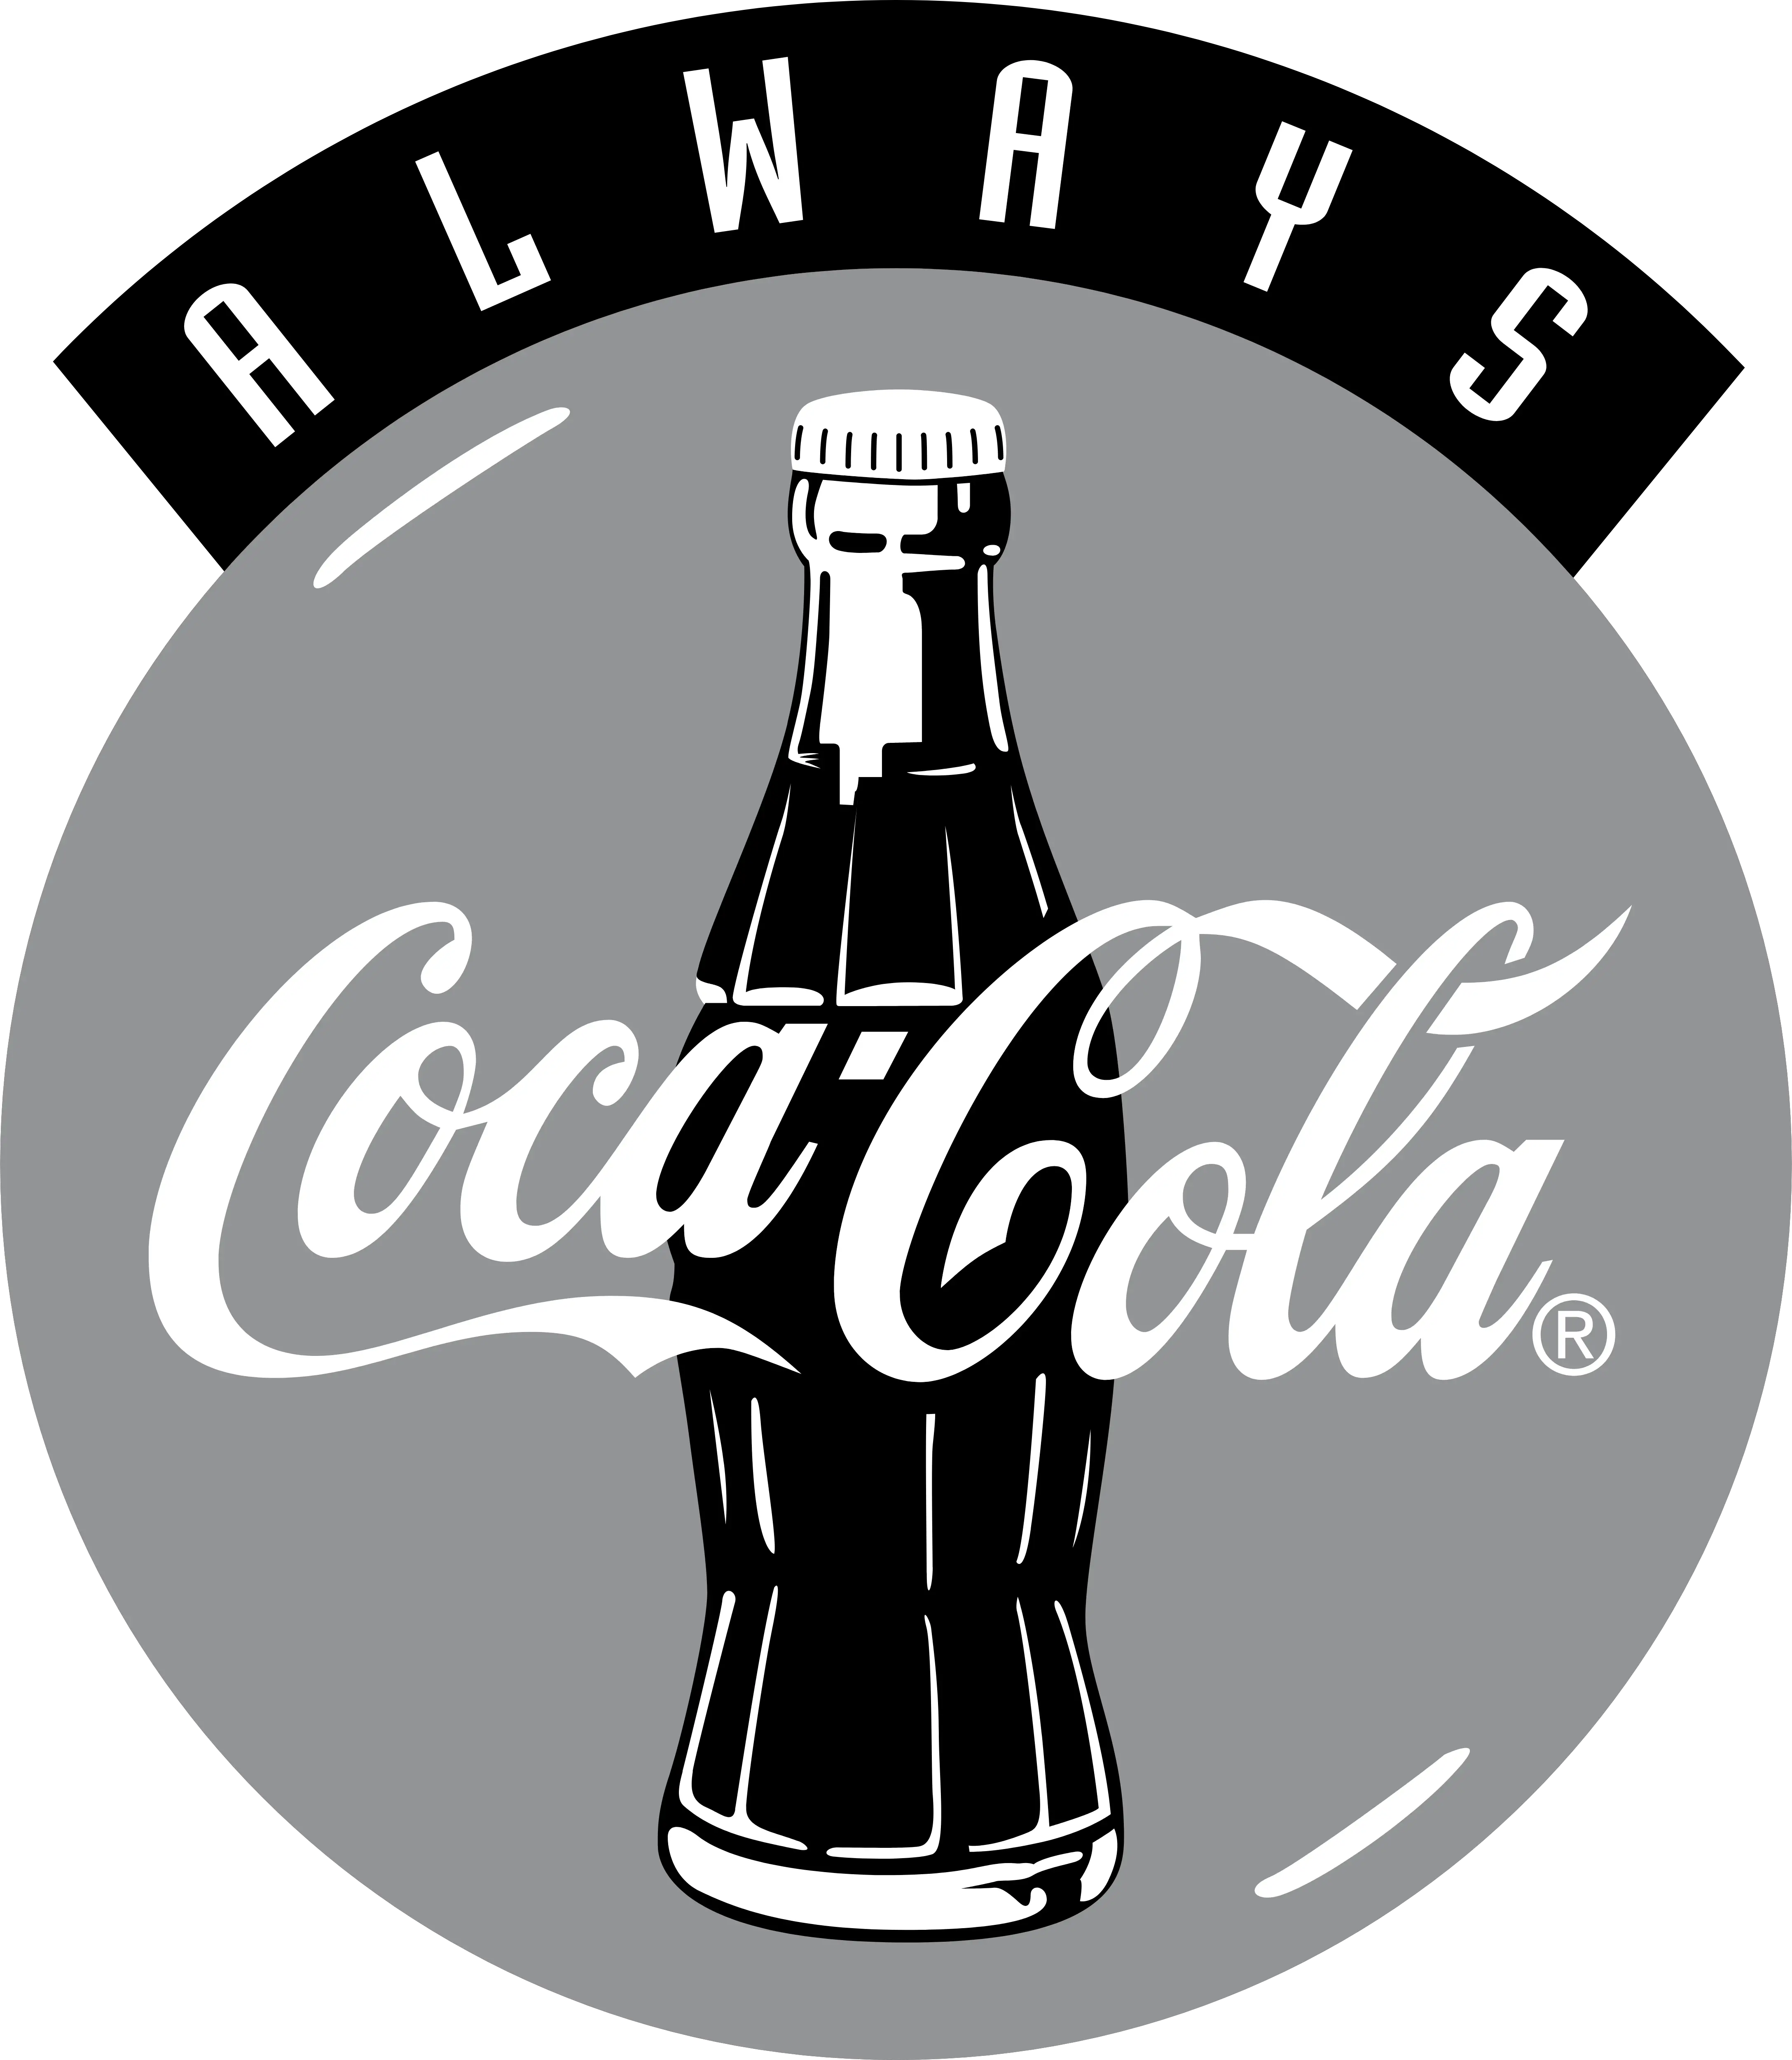 Coca Cola Logo4 Logo Png Transparent Coca Cola Black And White Coke Logo Png